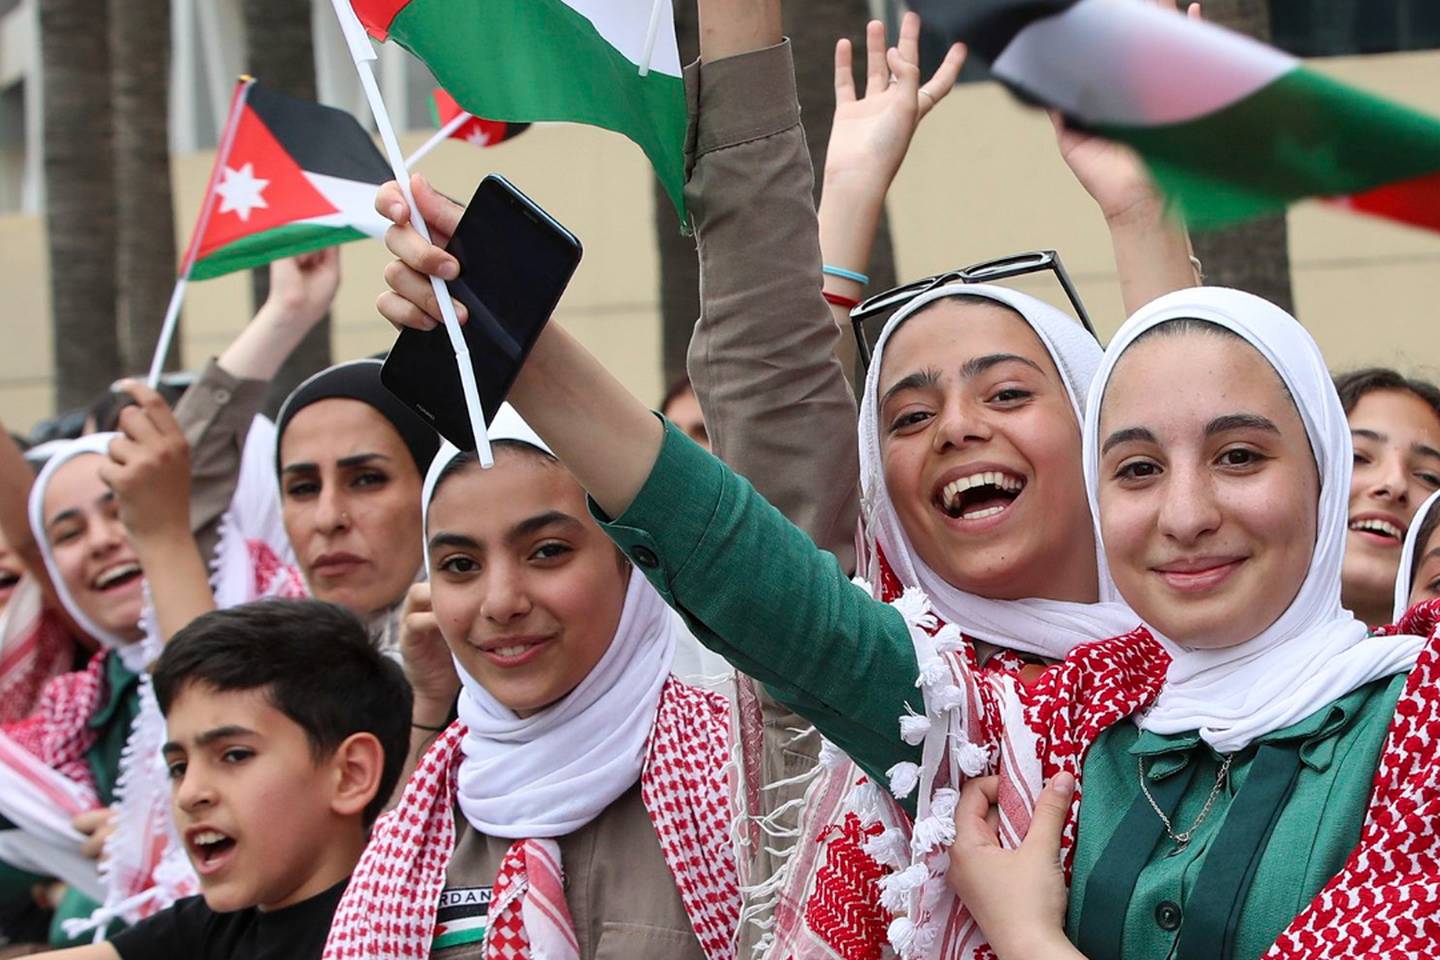 Jordanians celebrate the royal wedding